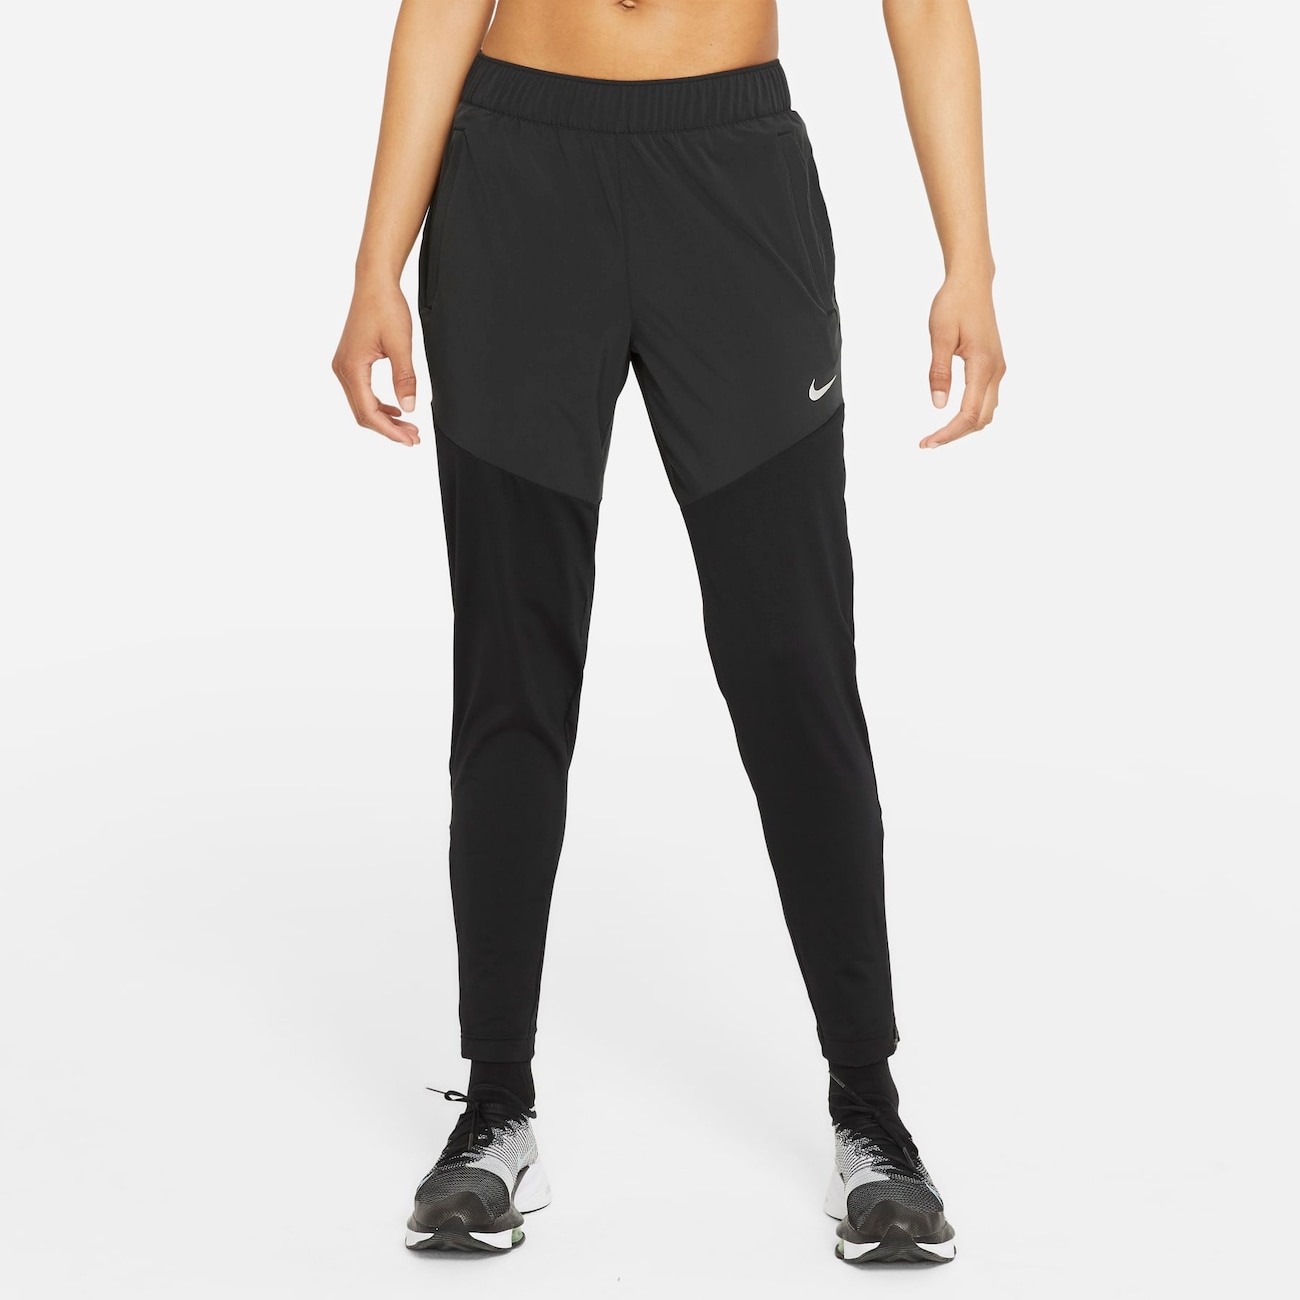 spring Failure overrun Oferta de Calça Nike Dri-FIT Essential Feminina - Nike - Just Do It